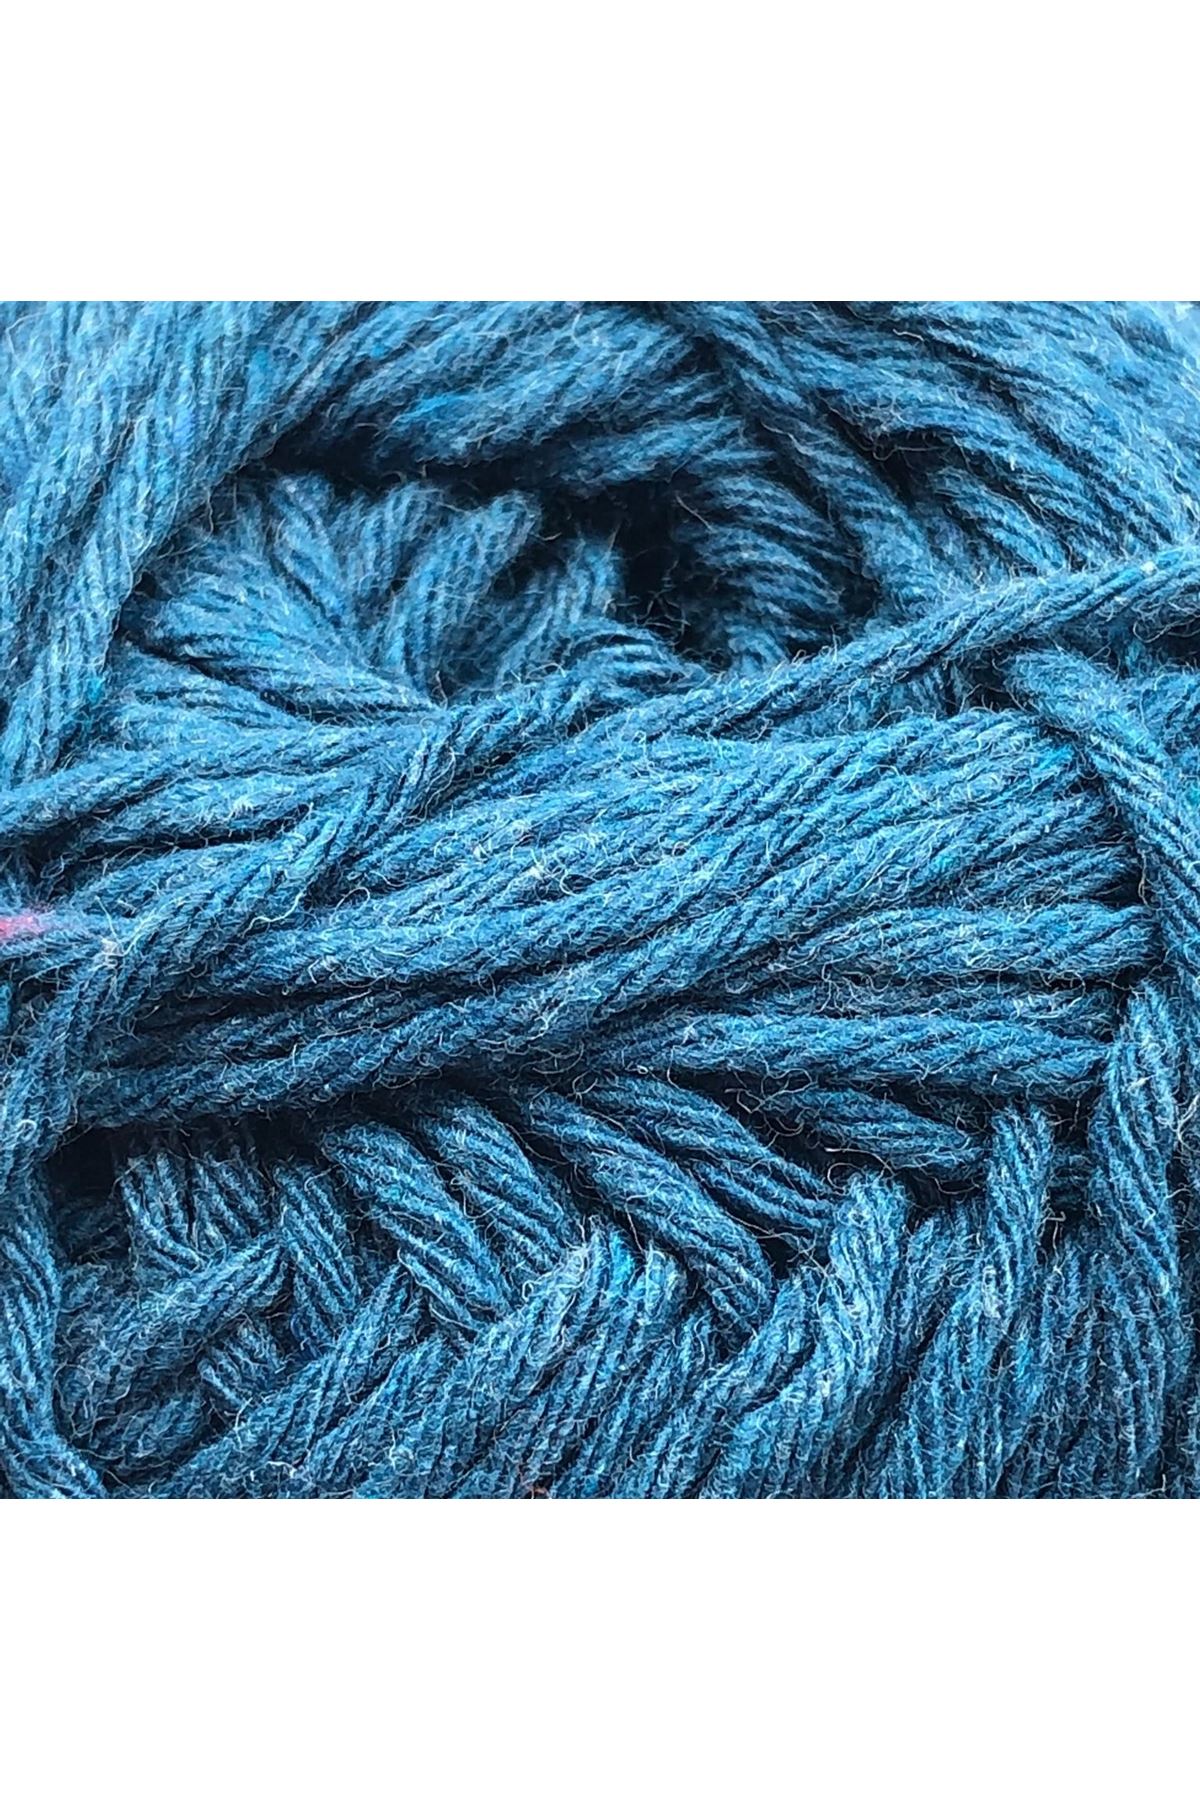 Eco Cotton 100 gram - 38760 - Kot Mavi